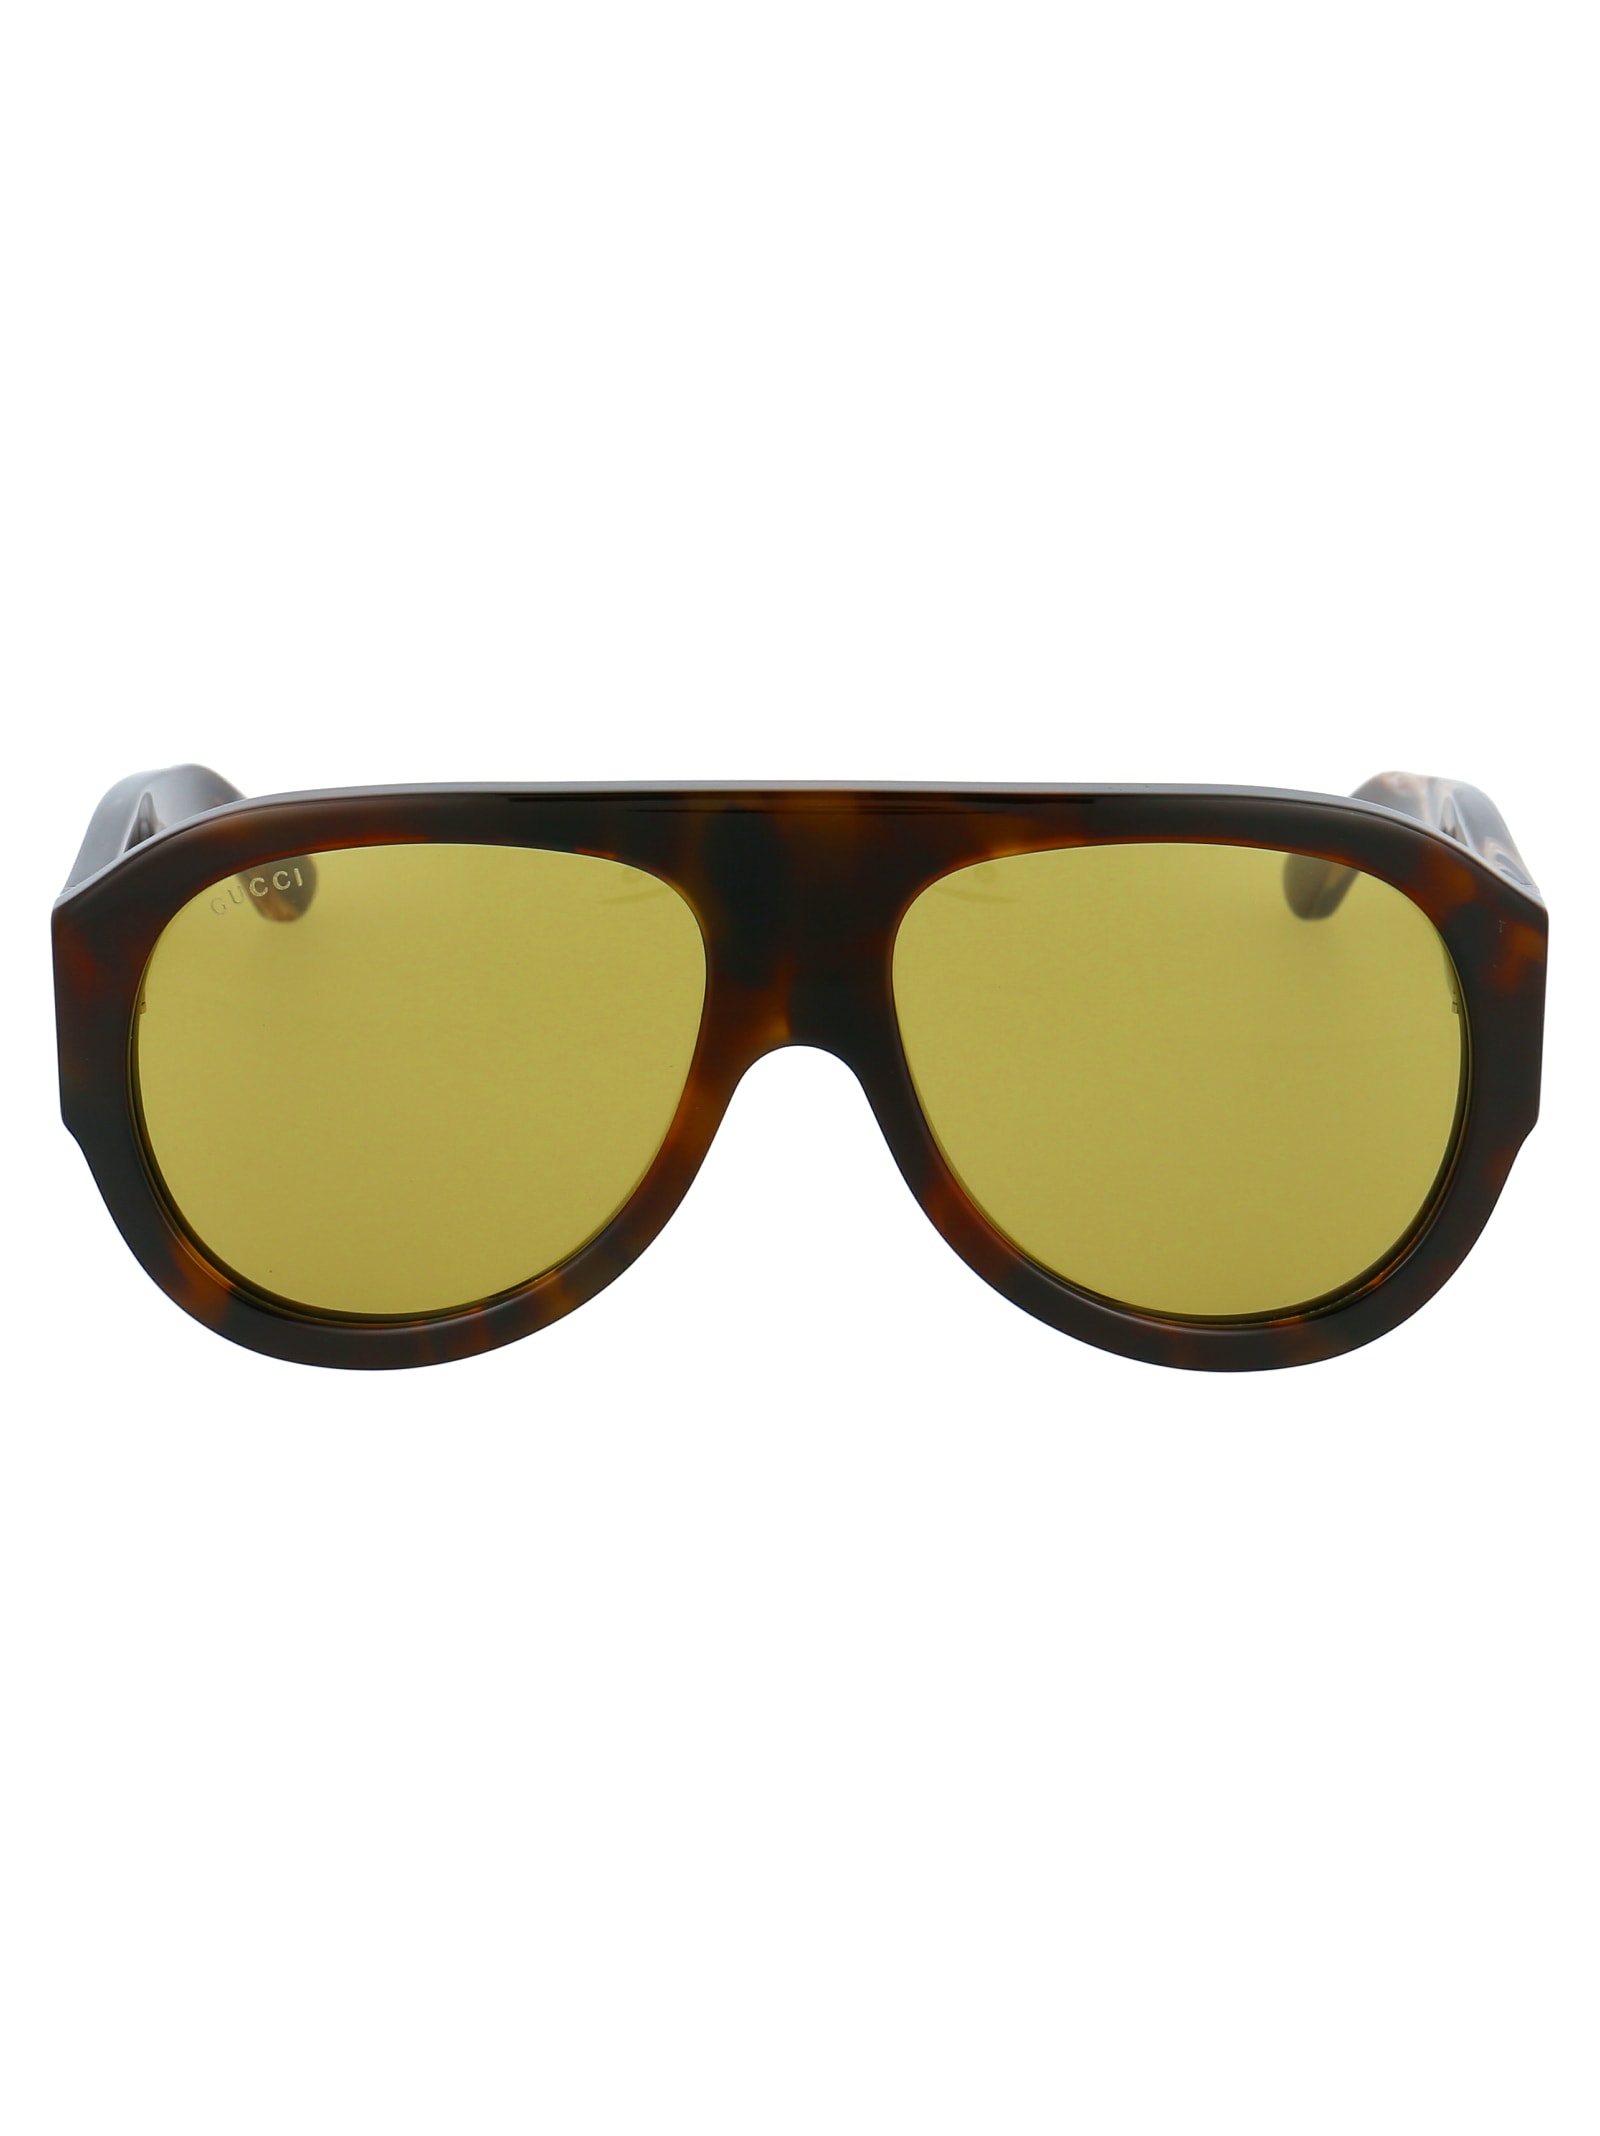 Gucci Sunglasses In Brown Brown Green